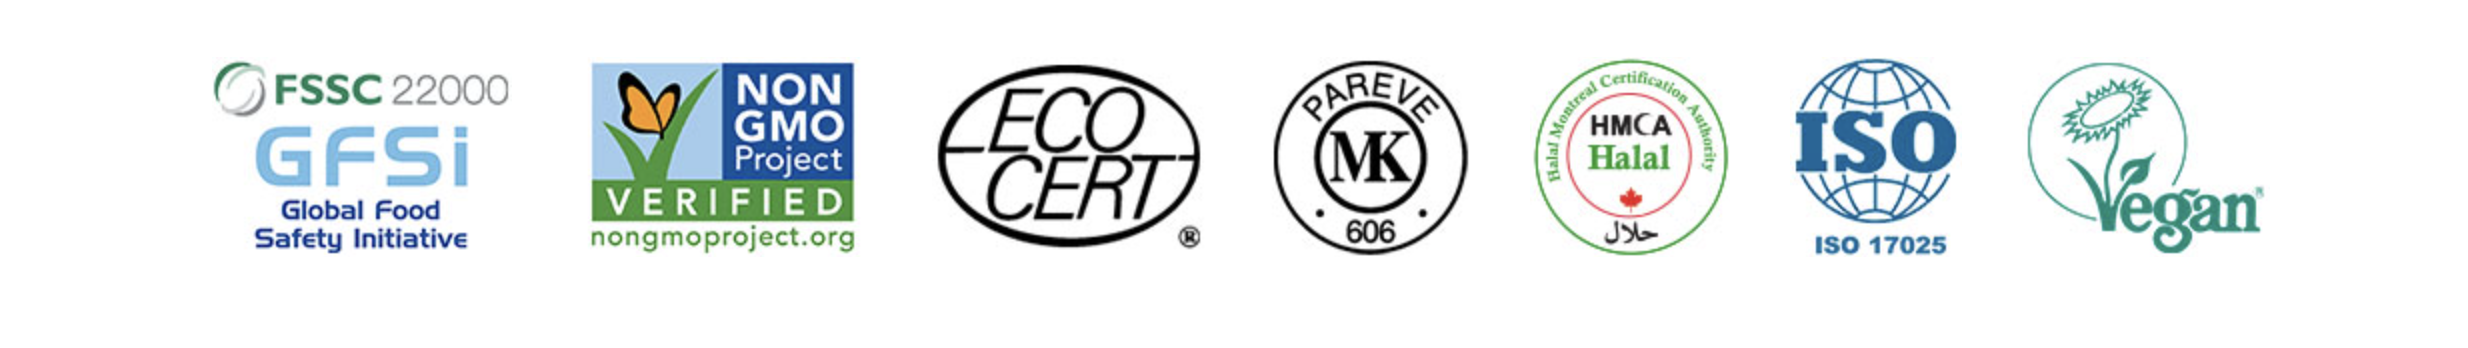 Logos certifications